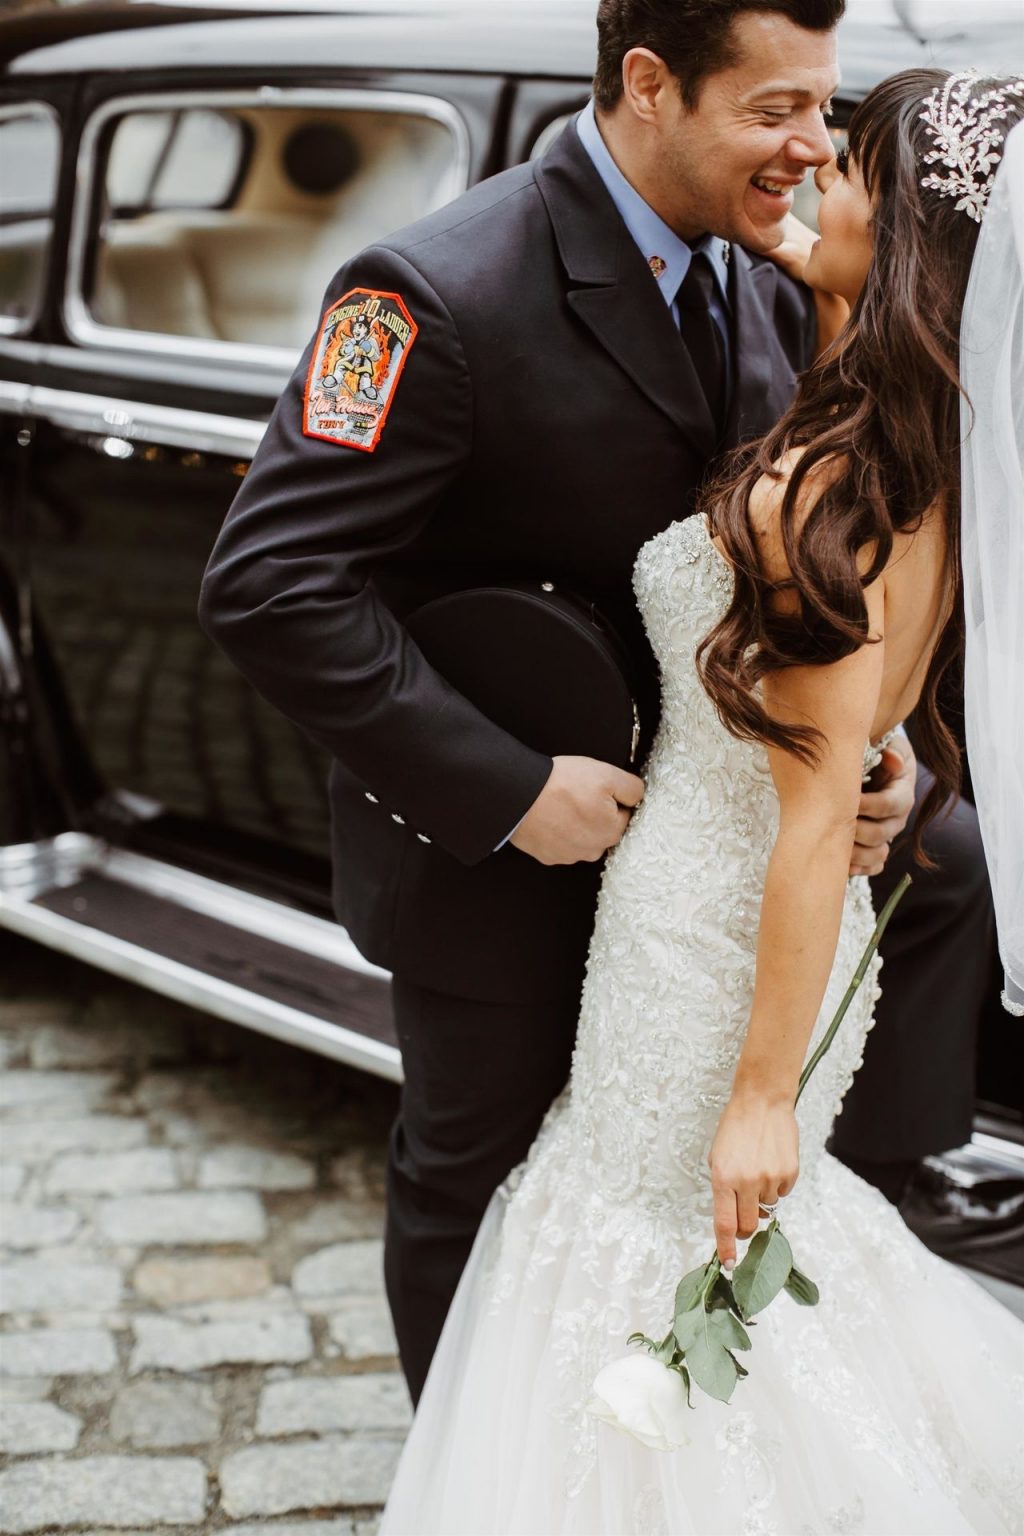 Roxanne Pallett Secretly Married American Firefighter Jason Carrion (26 Photos)